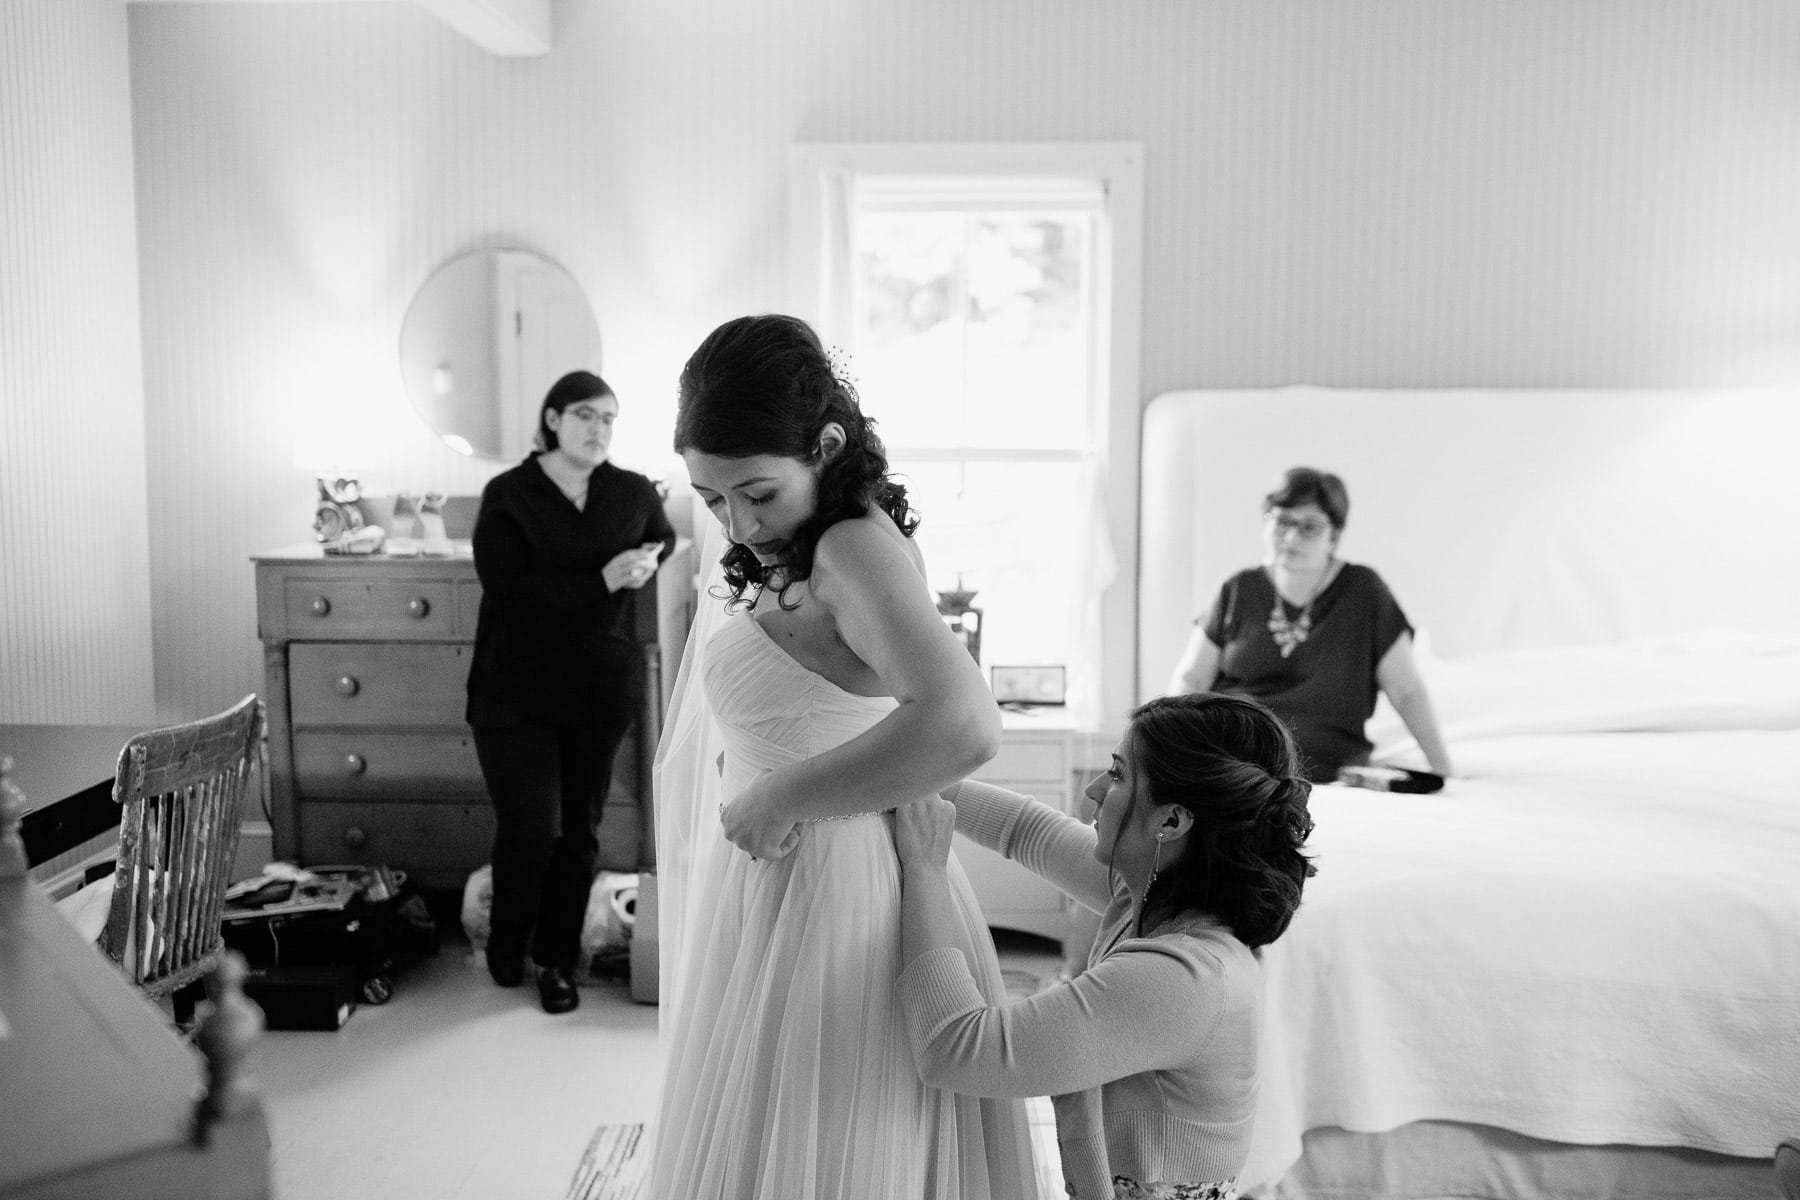 Getting ready for a wedding at Porches Inn North Adams, MA | Kelly Benvenuto Photography | Boston Wedding Photographer